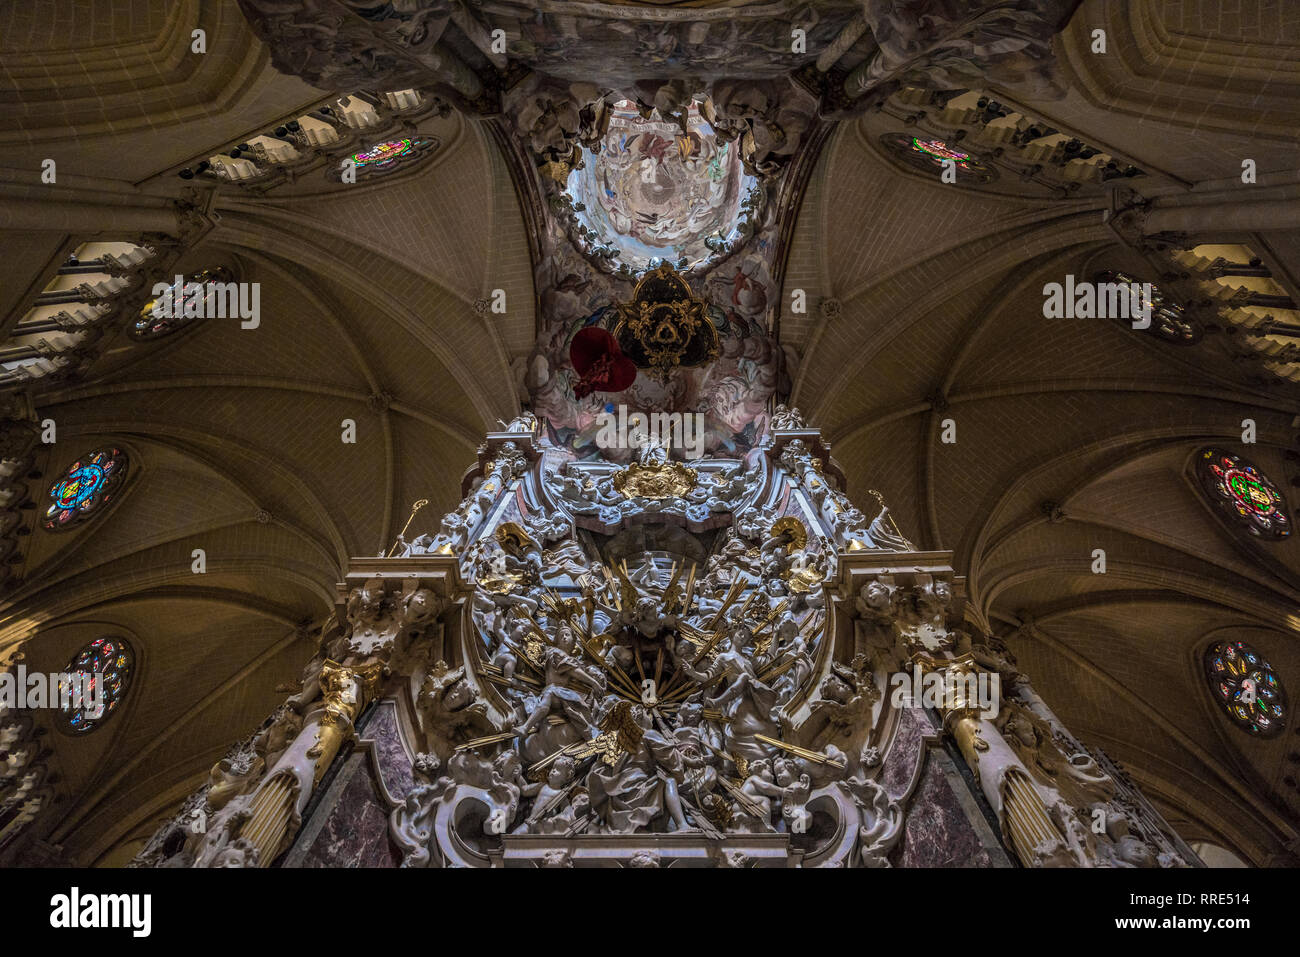 Toledo, Castille la Mancha, Spain - April 04, 2017: Altar del Transparente, Baroque altarpiece in the ambulatory of the Cathedral of Toledo Stock Photo